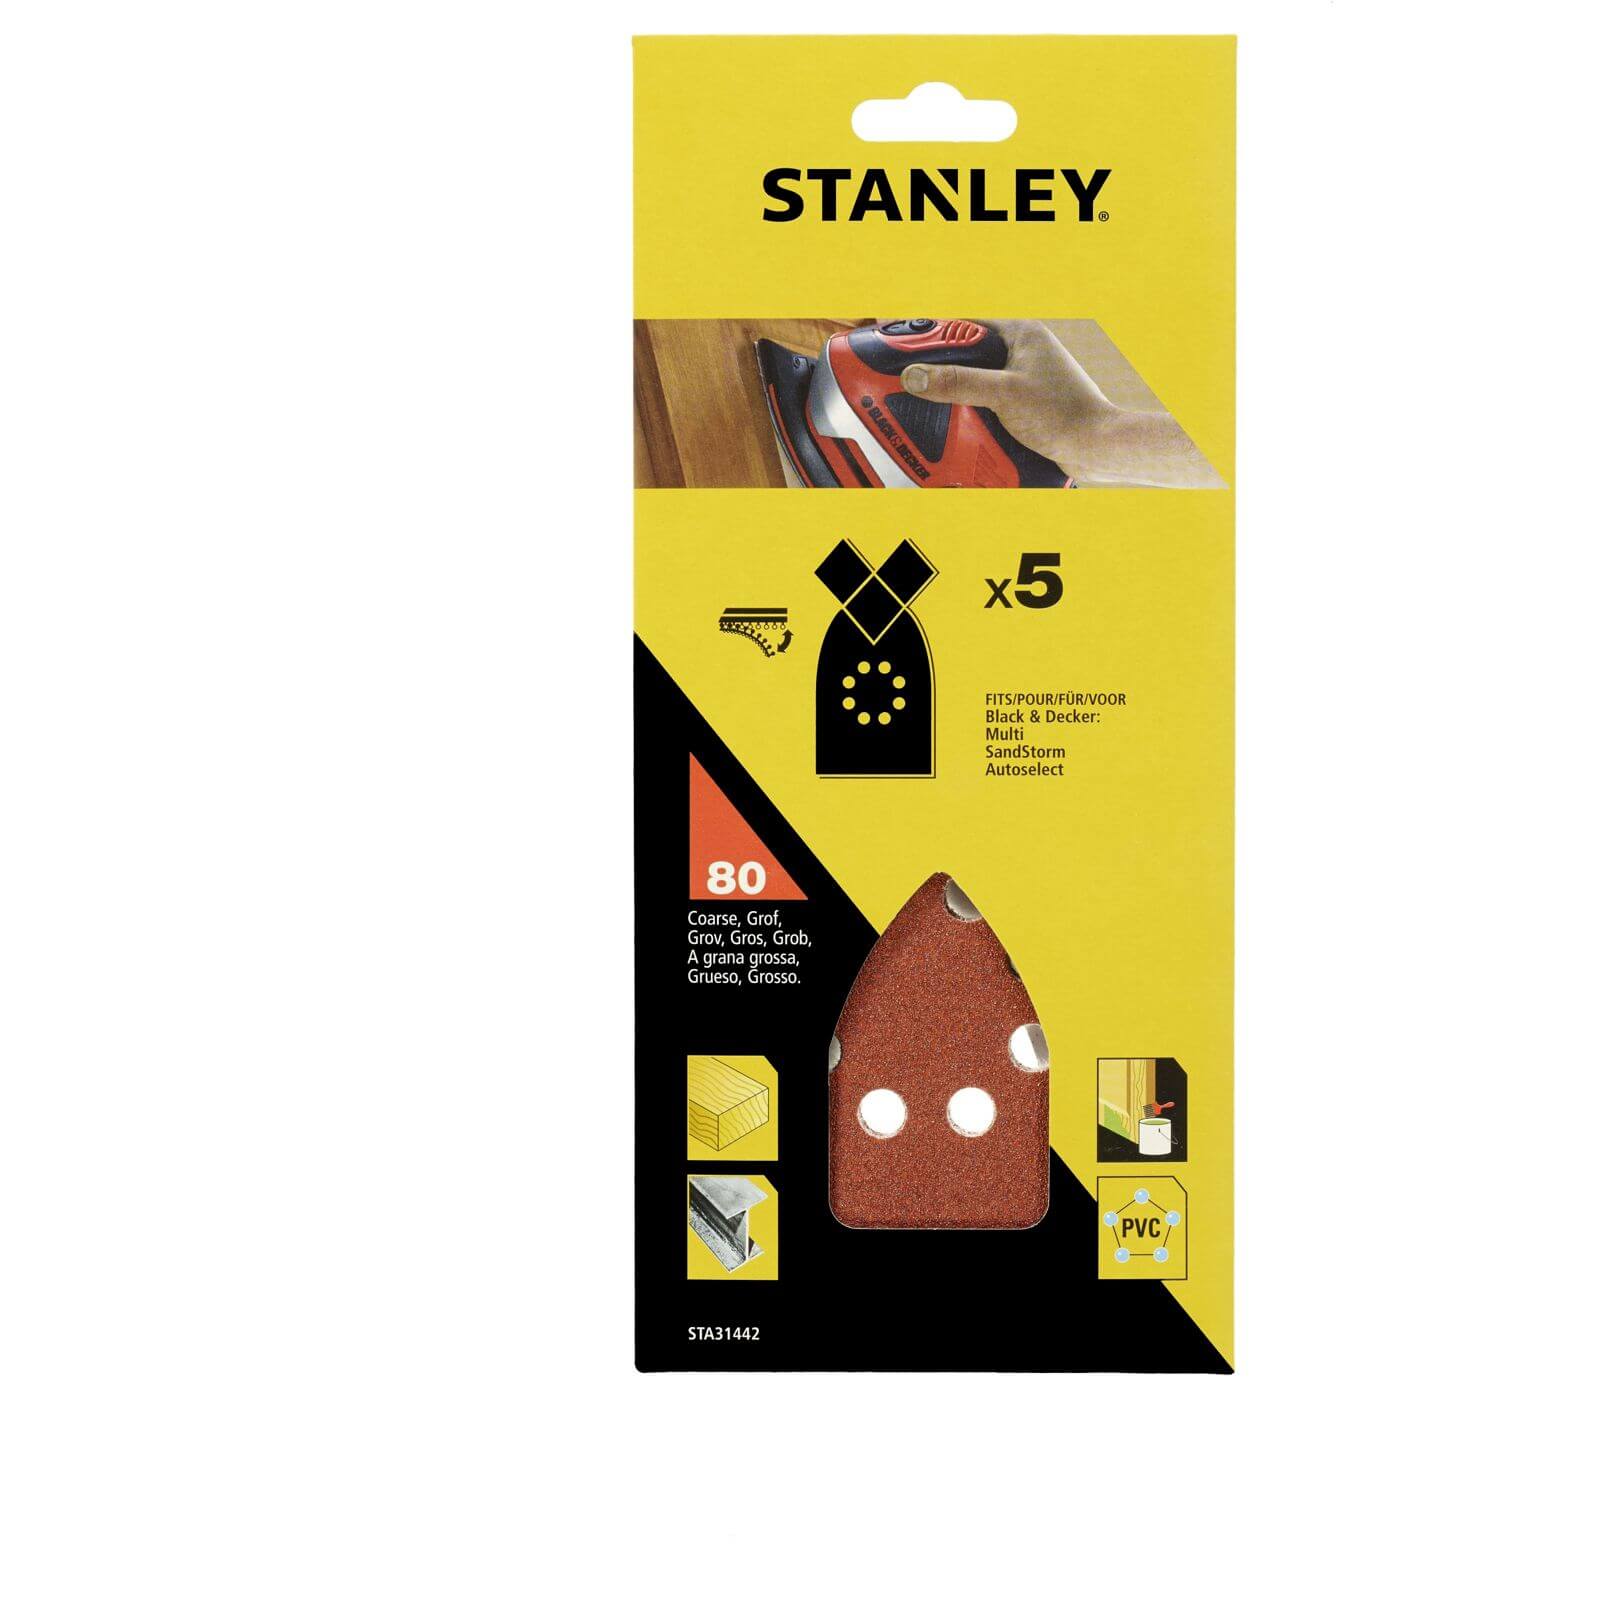 Photo of Stanley Sanding Sheets - 80g - Sta31442-xj